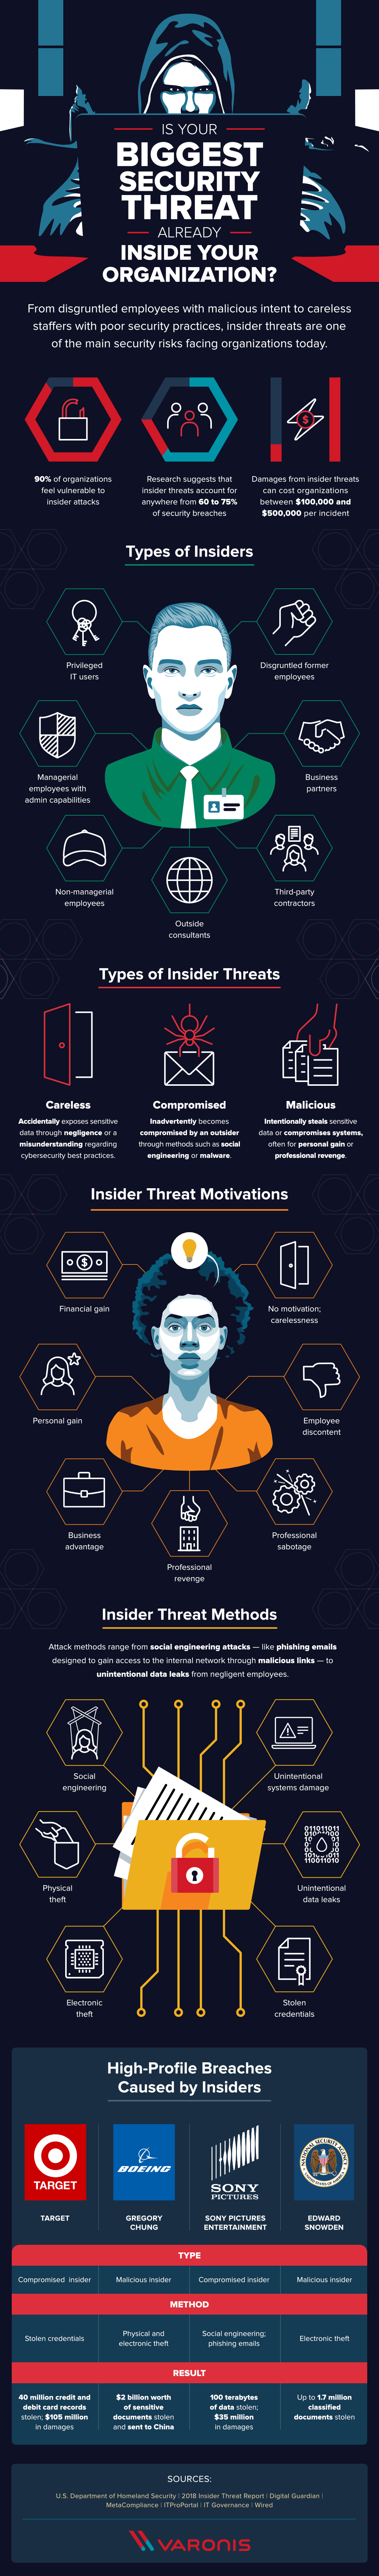 Insider_cybersecurity_threats